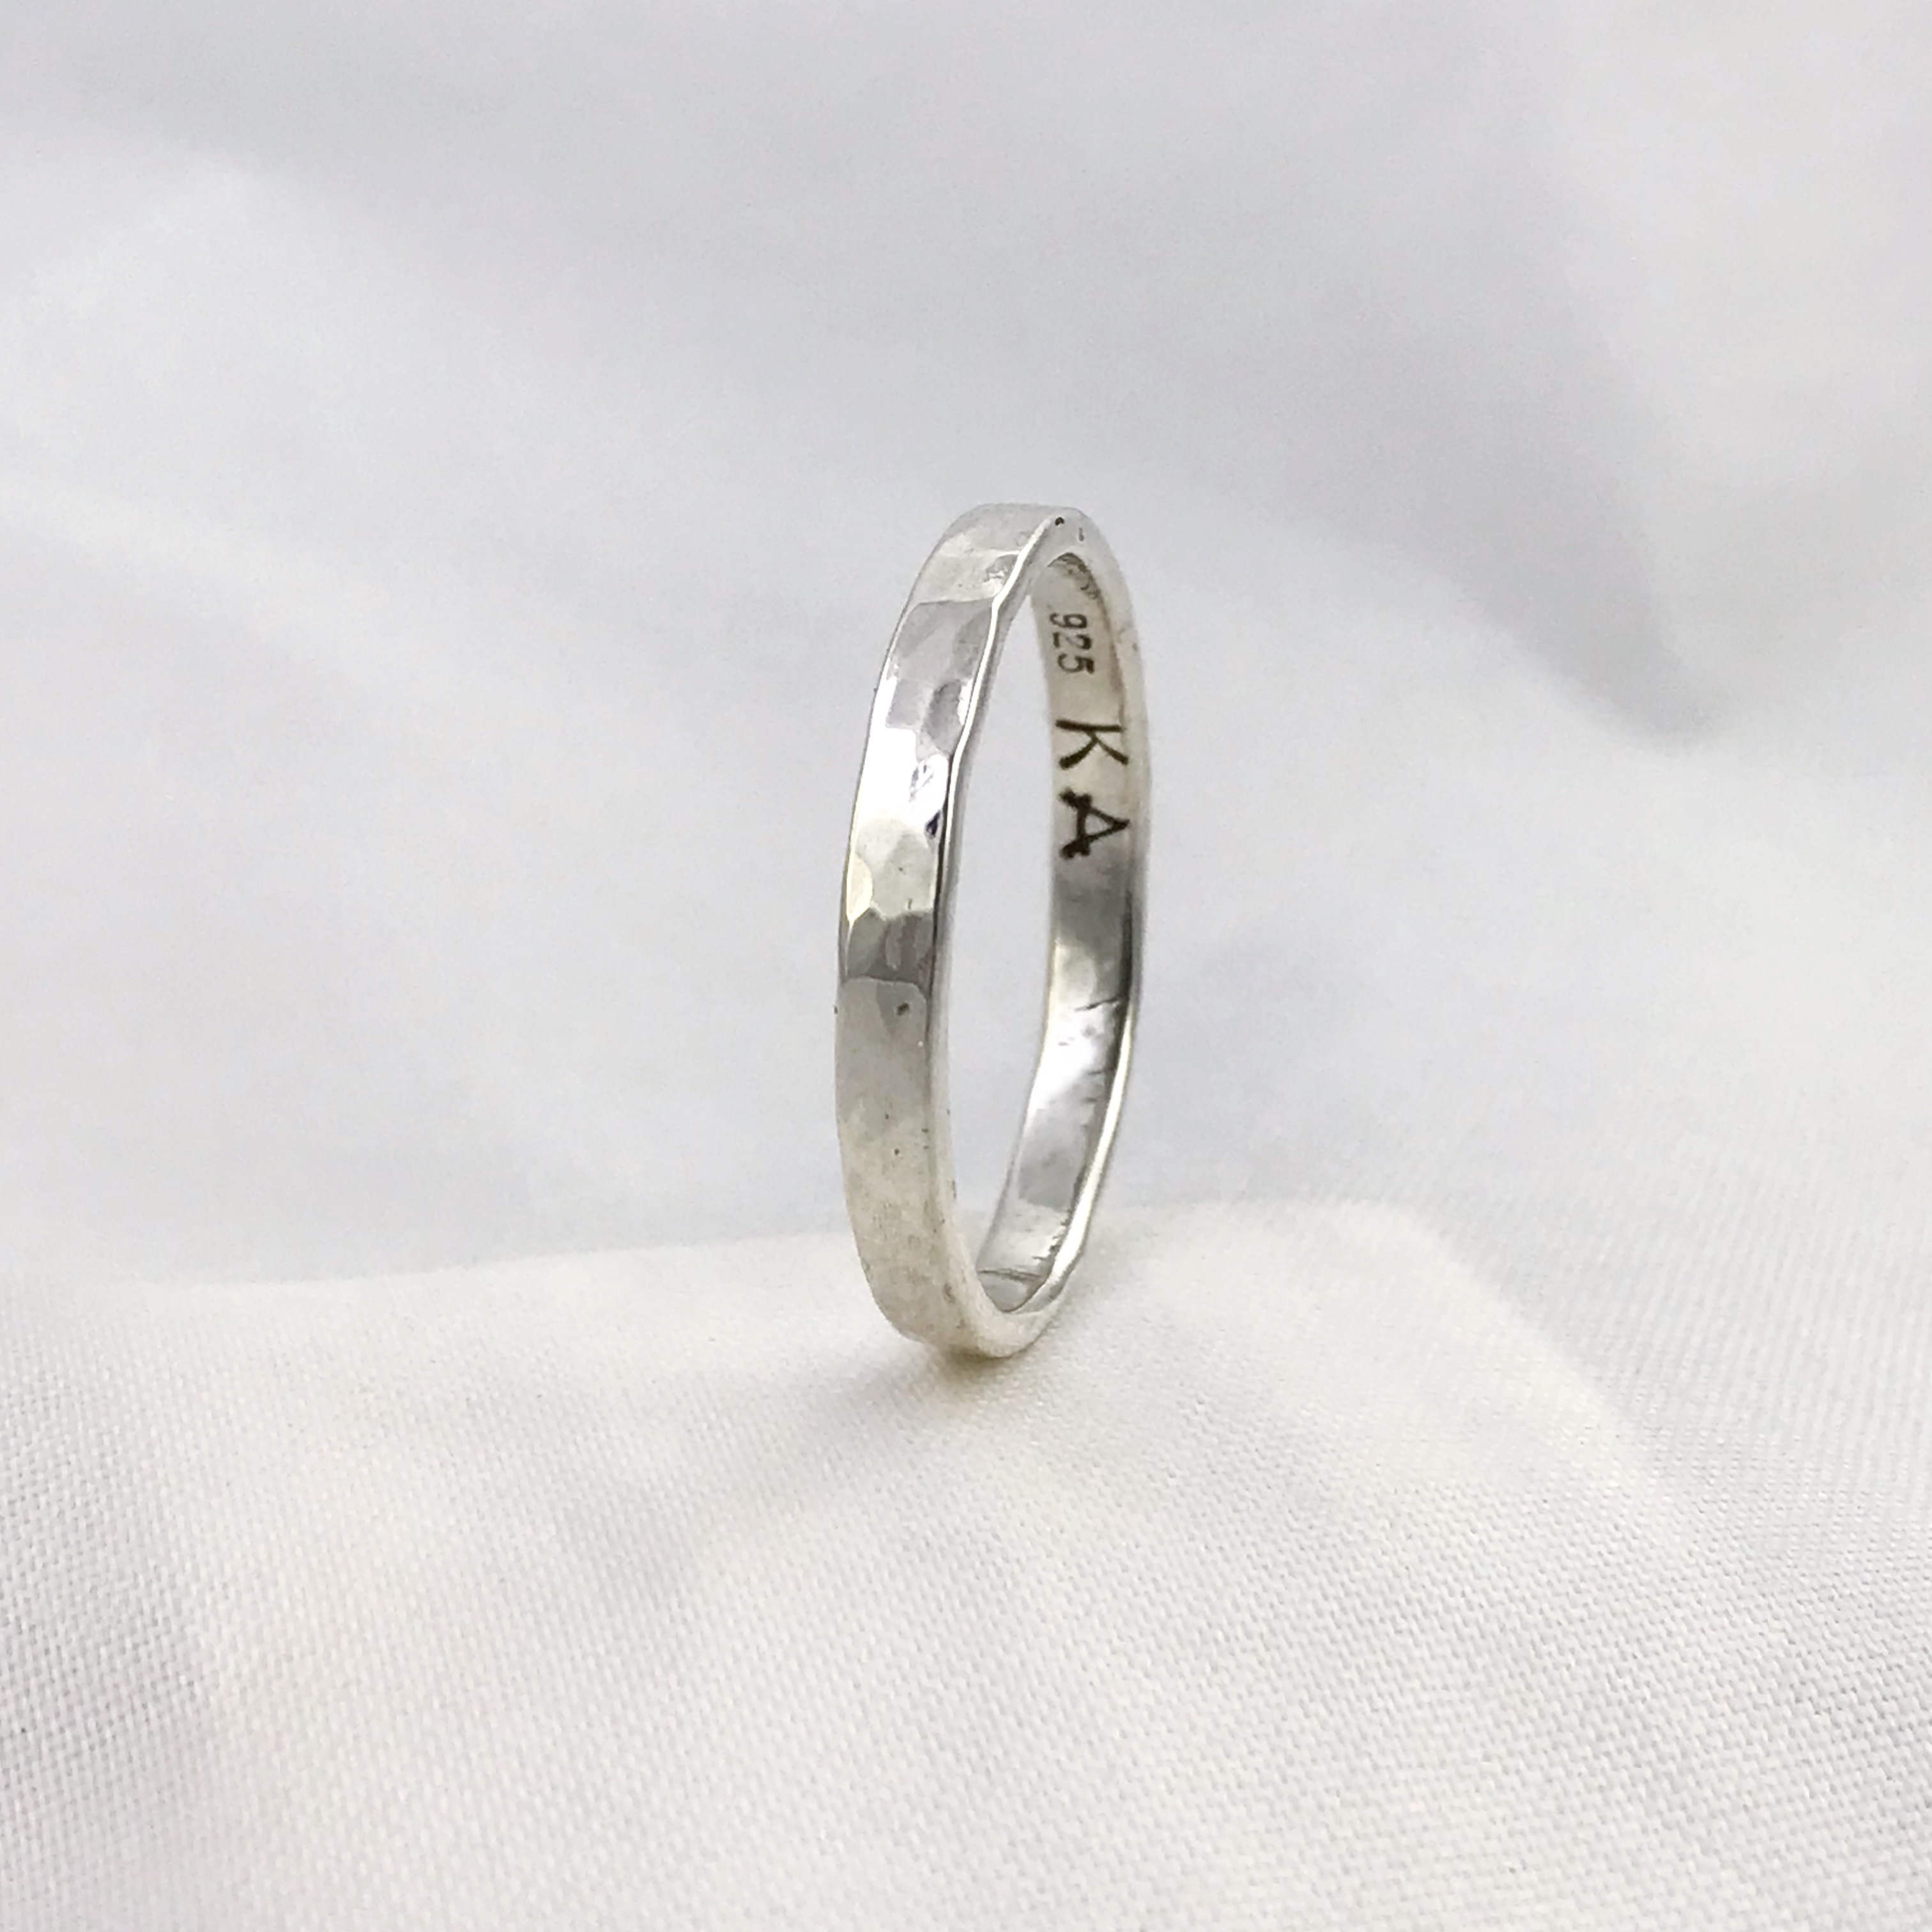 Hammered silver ring rings for men custom made rings Unisex ring sterling silver rings for women